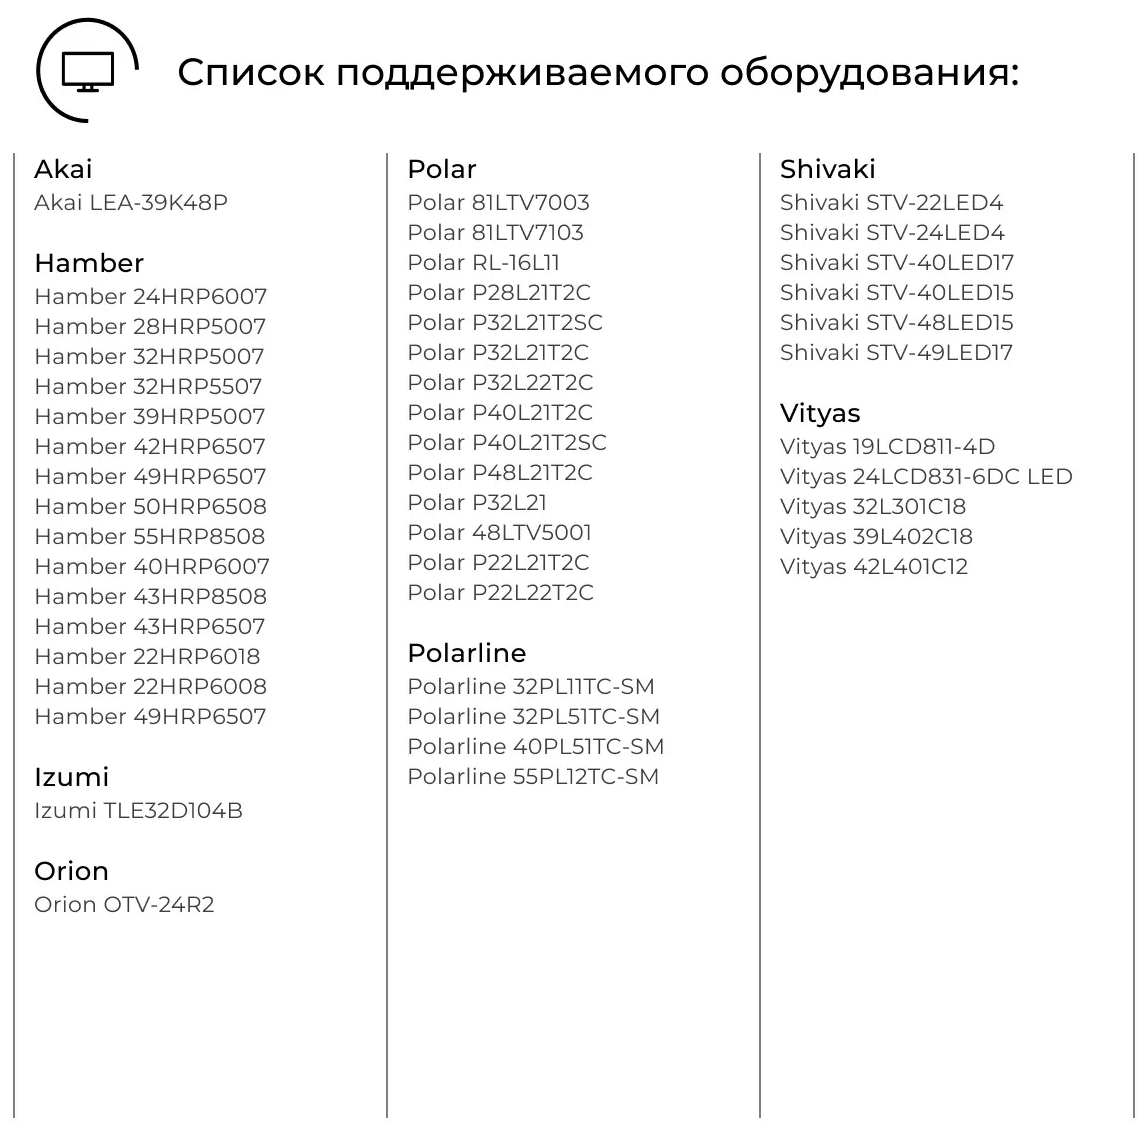 Пульт PDUSPB K77 19053 для Akai / Hamber / Izumi / Orion / Polar / Polarline / Shivaki / Vityas